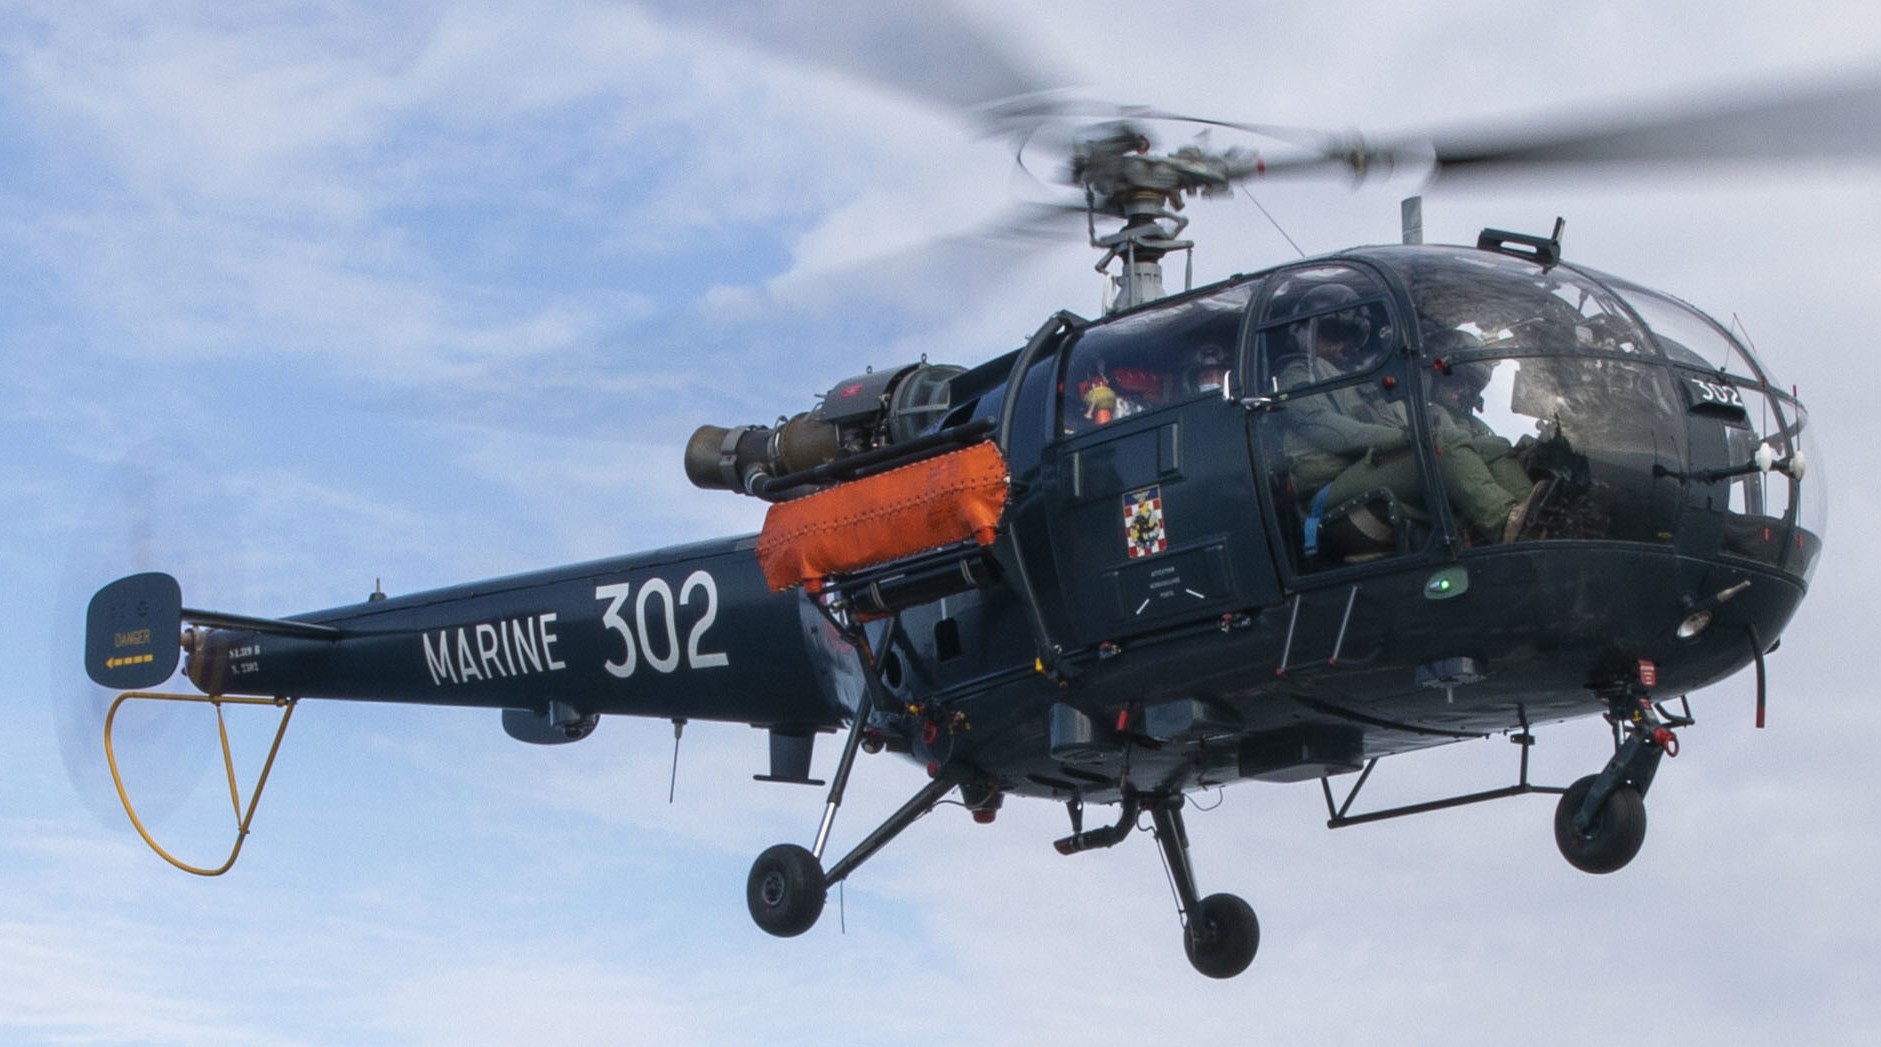 sa 316 319 alouette iii helicopter french navy marine nationale aeronavale flottille 302 27